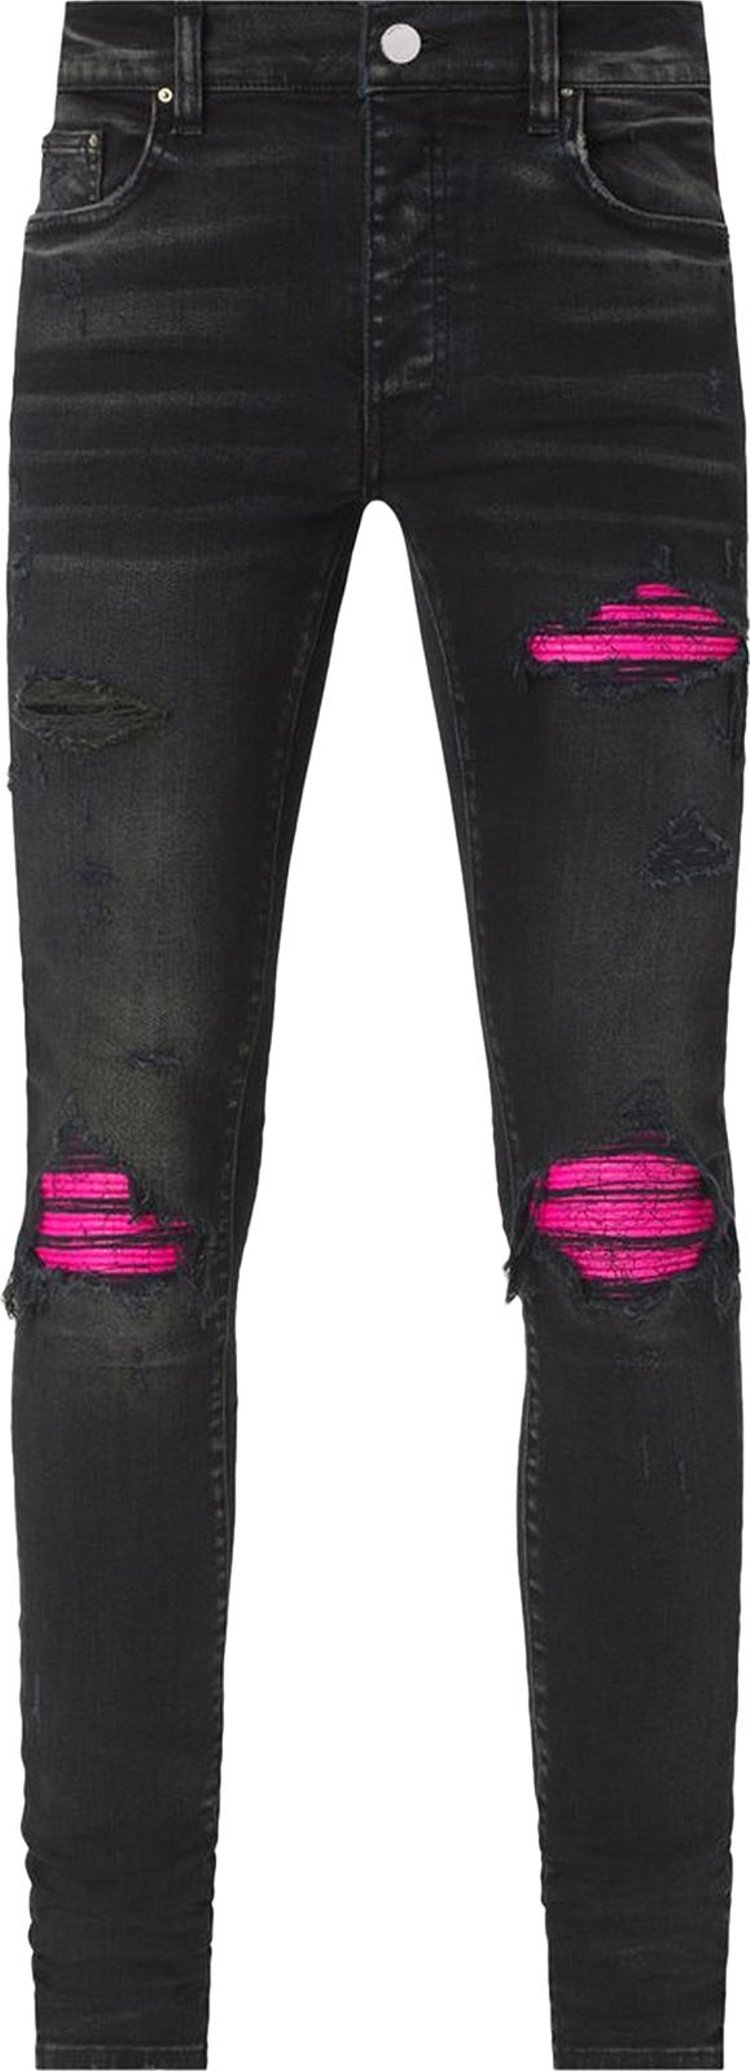 Amiri MX1 Cracked Leather Jean 'Aged Black/Pink'